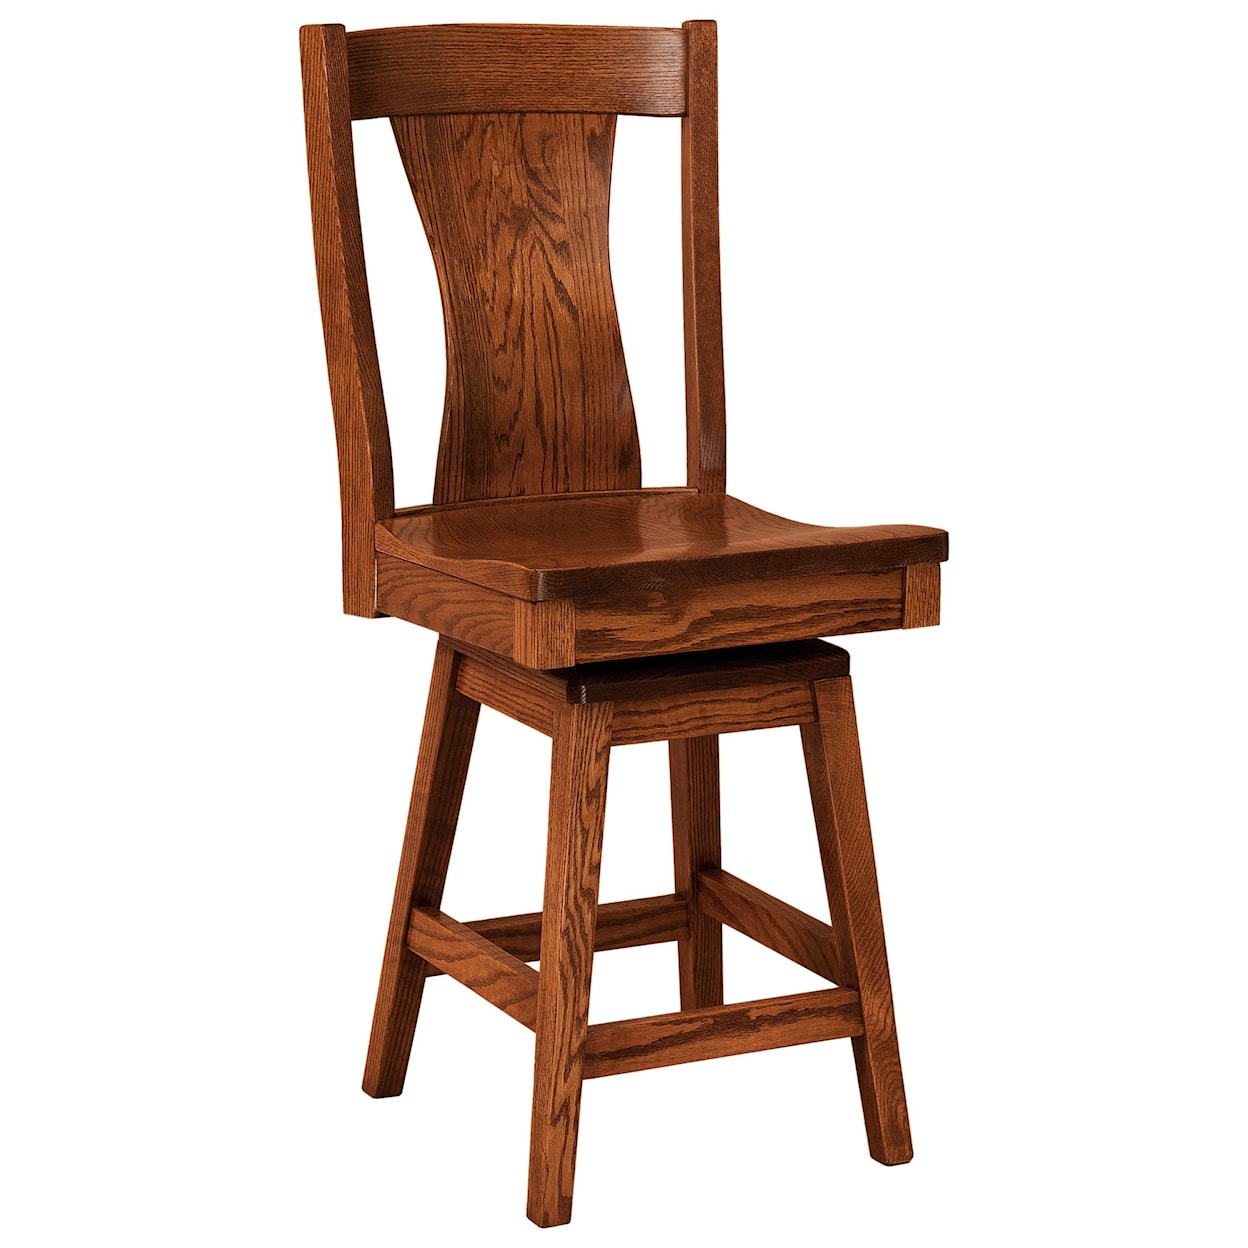 F&N Woodworking Westin Swivel Counter Height Stool - Fabric Seat